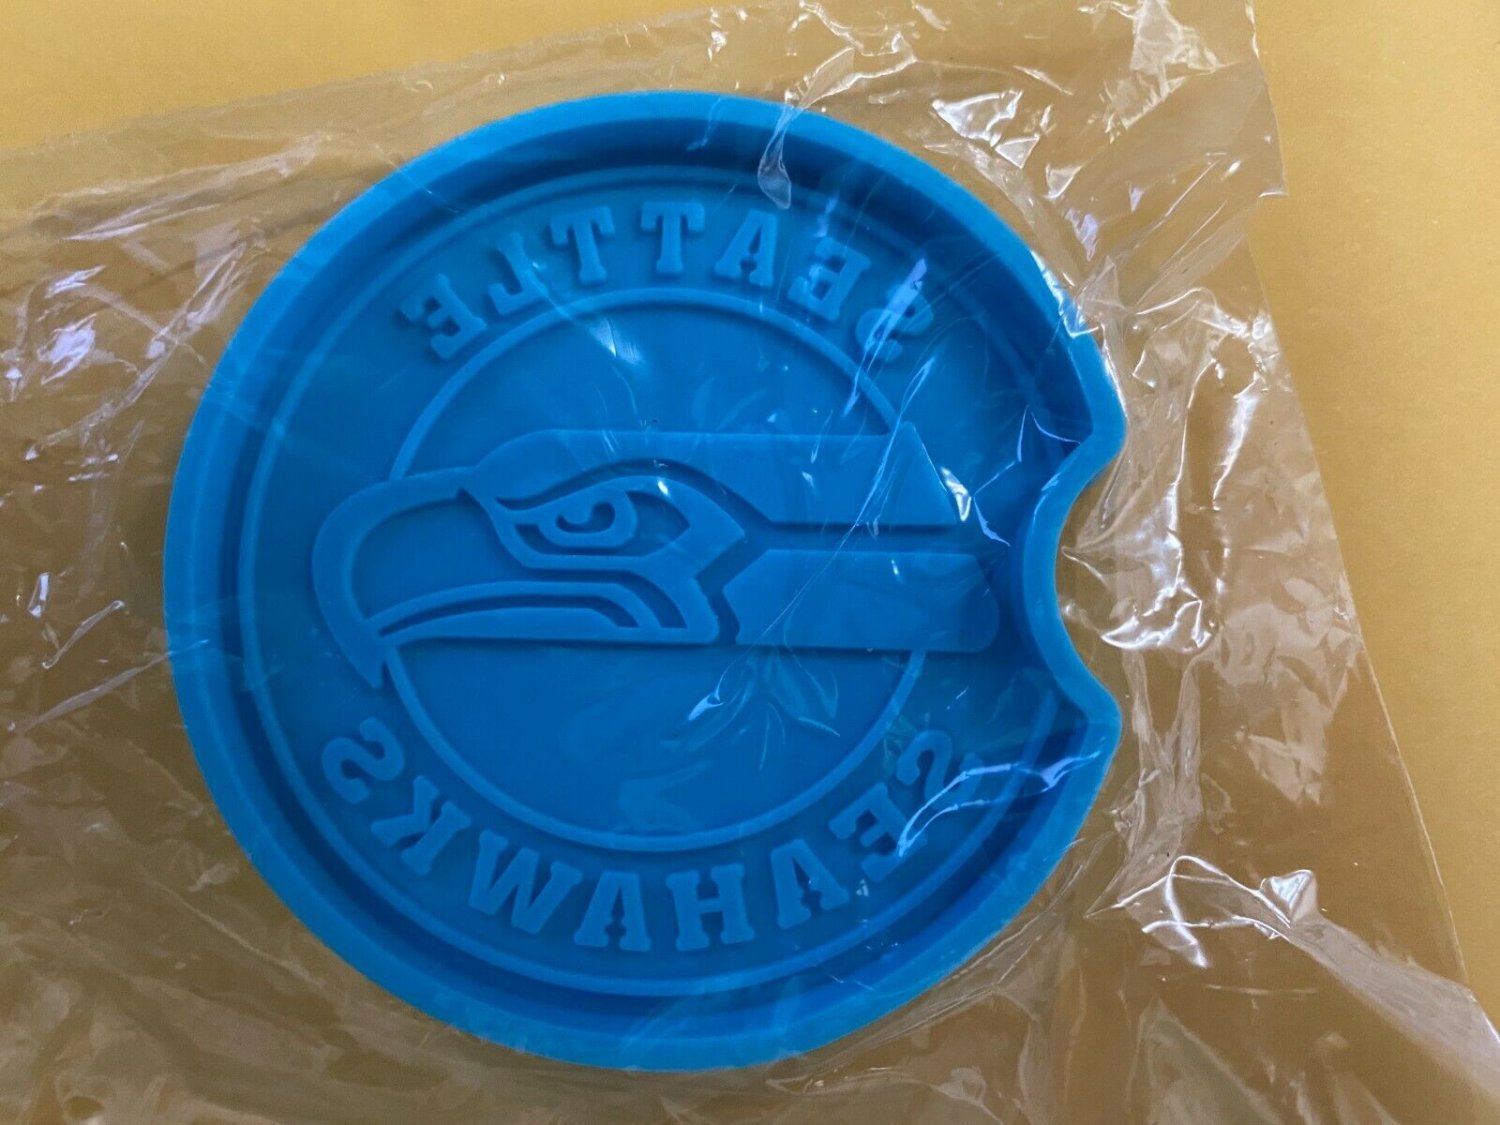 Seattle Seahawks resin mold